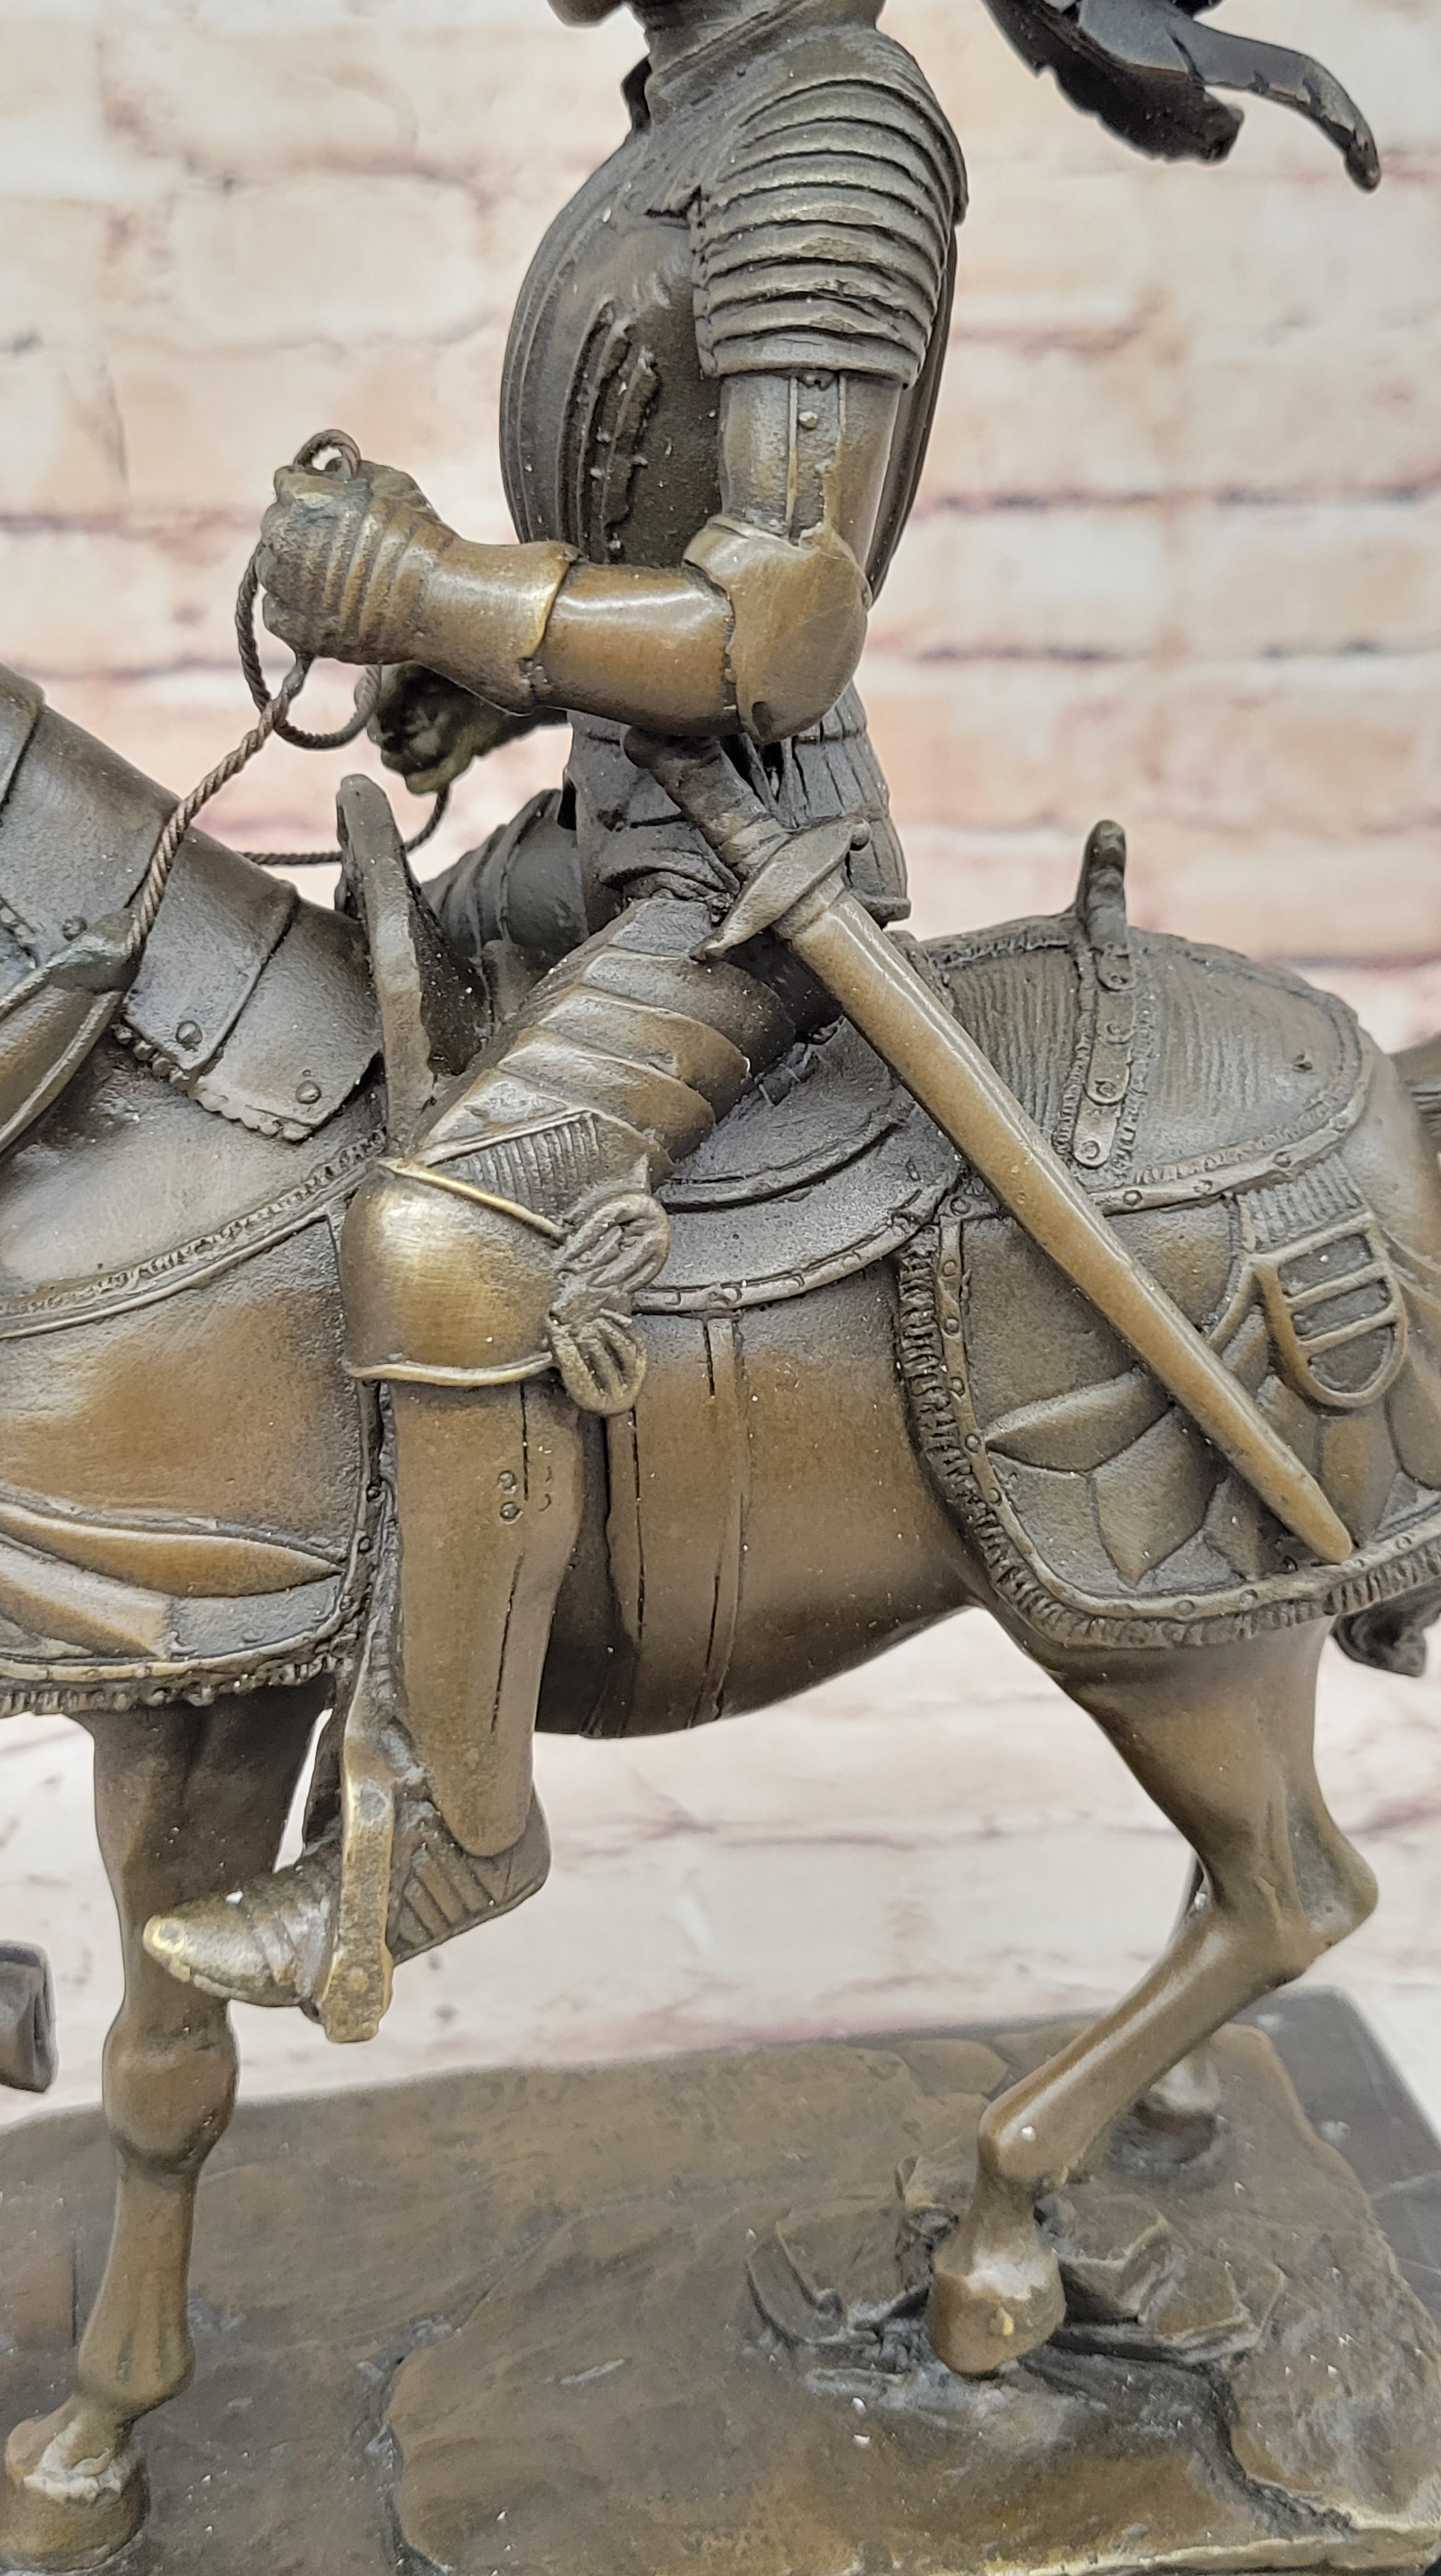 Bronze Sculpture Soldier Medieval Knight Armor Riding Horse Souvenirs Statue Art